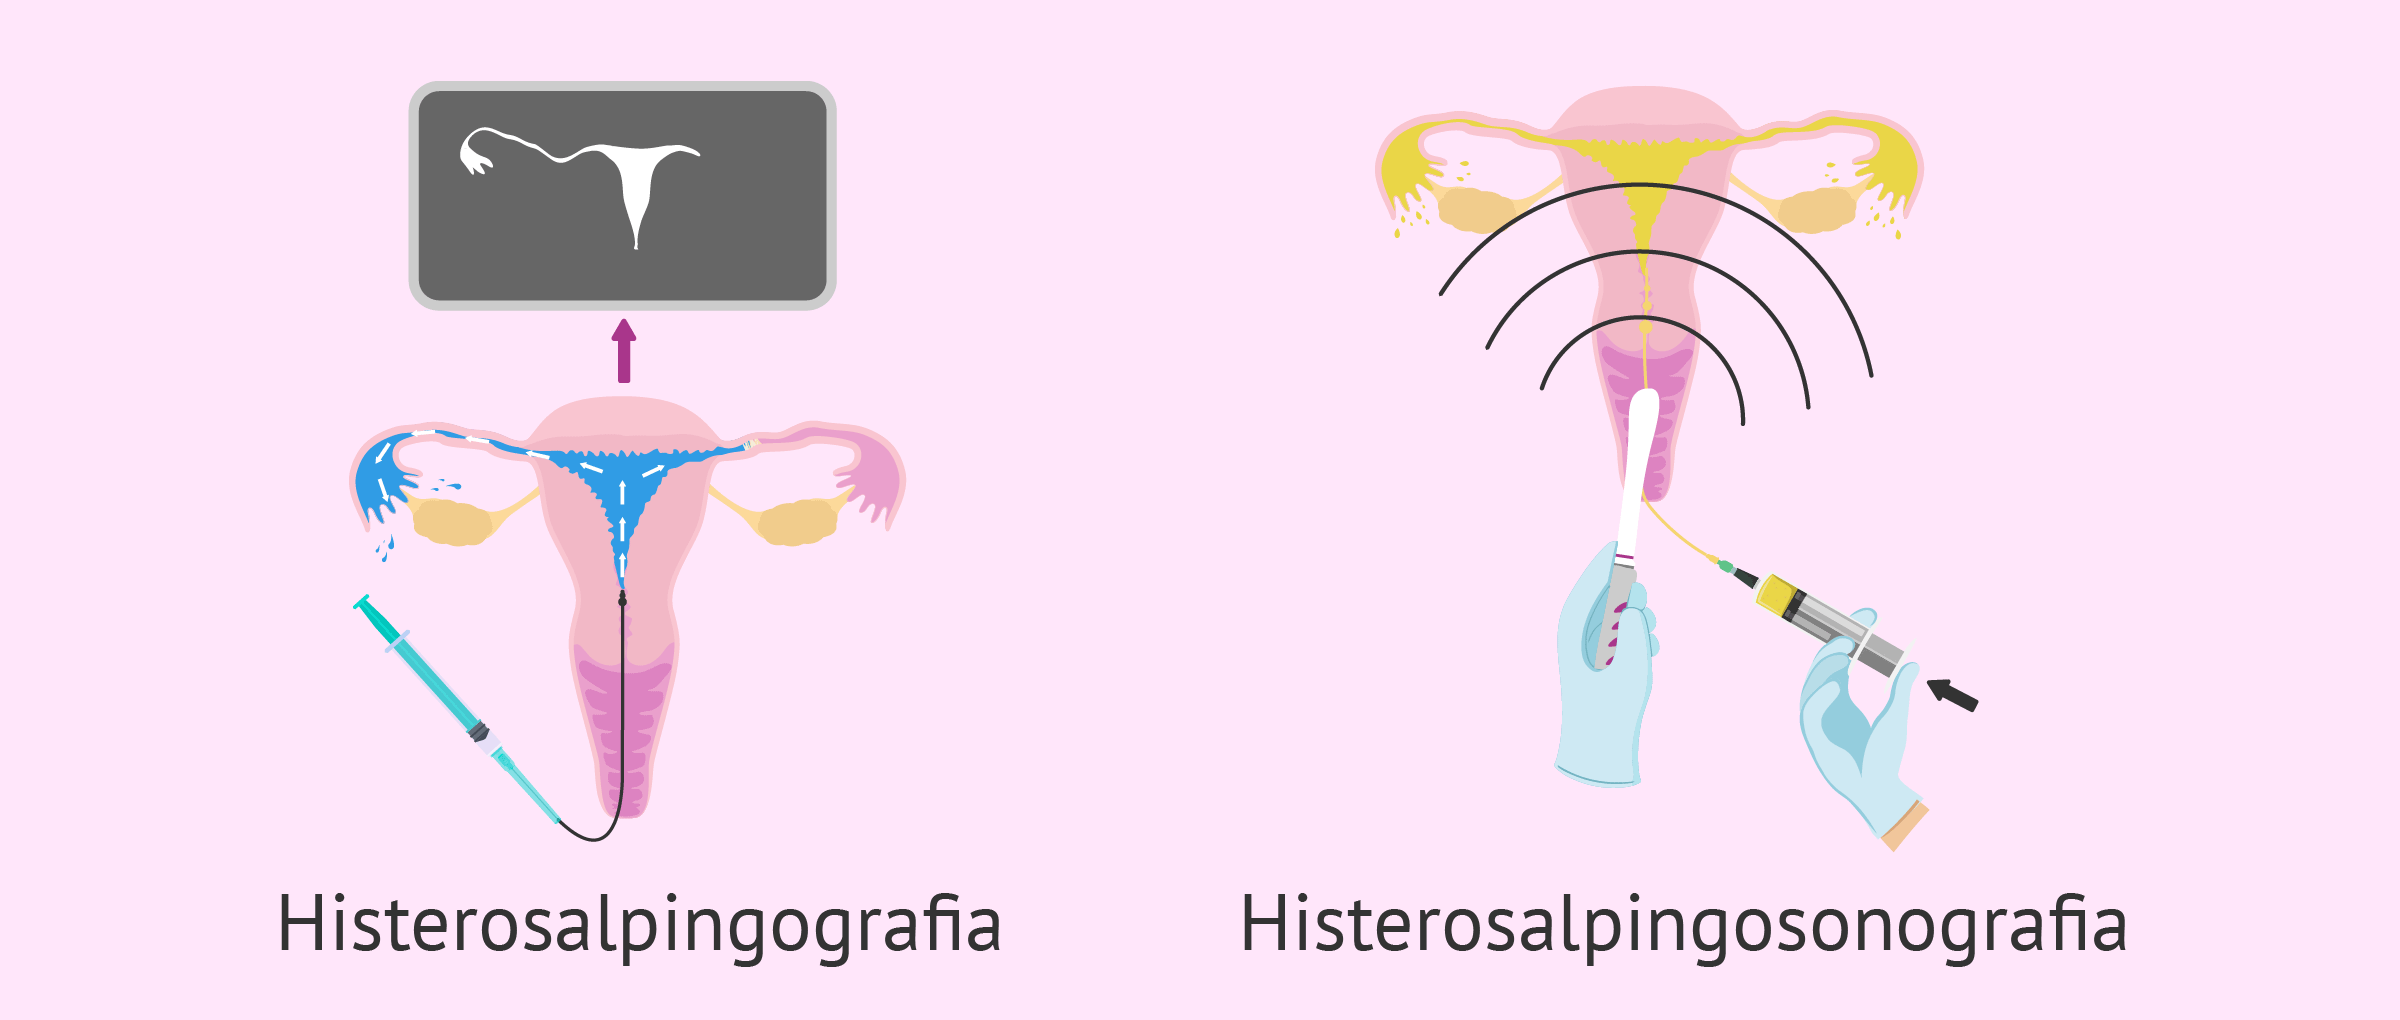 Tipus de histerosalpingografia